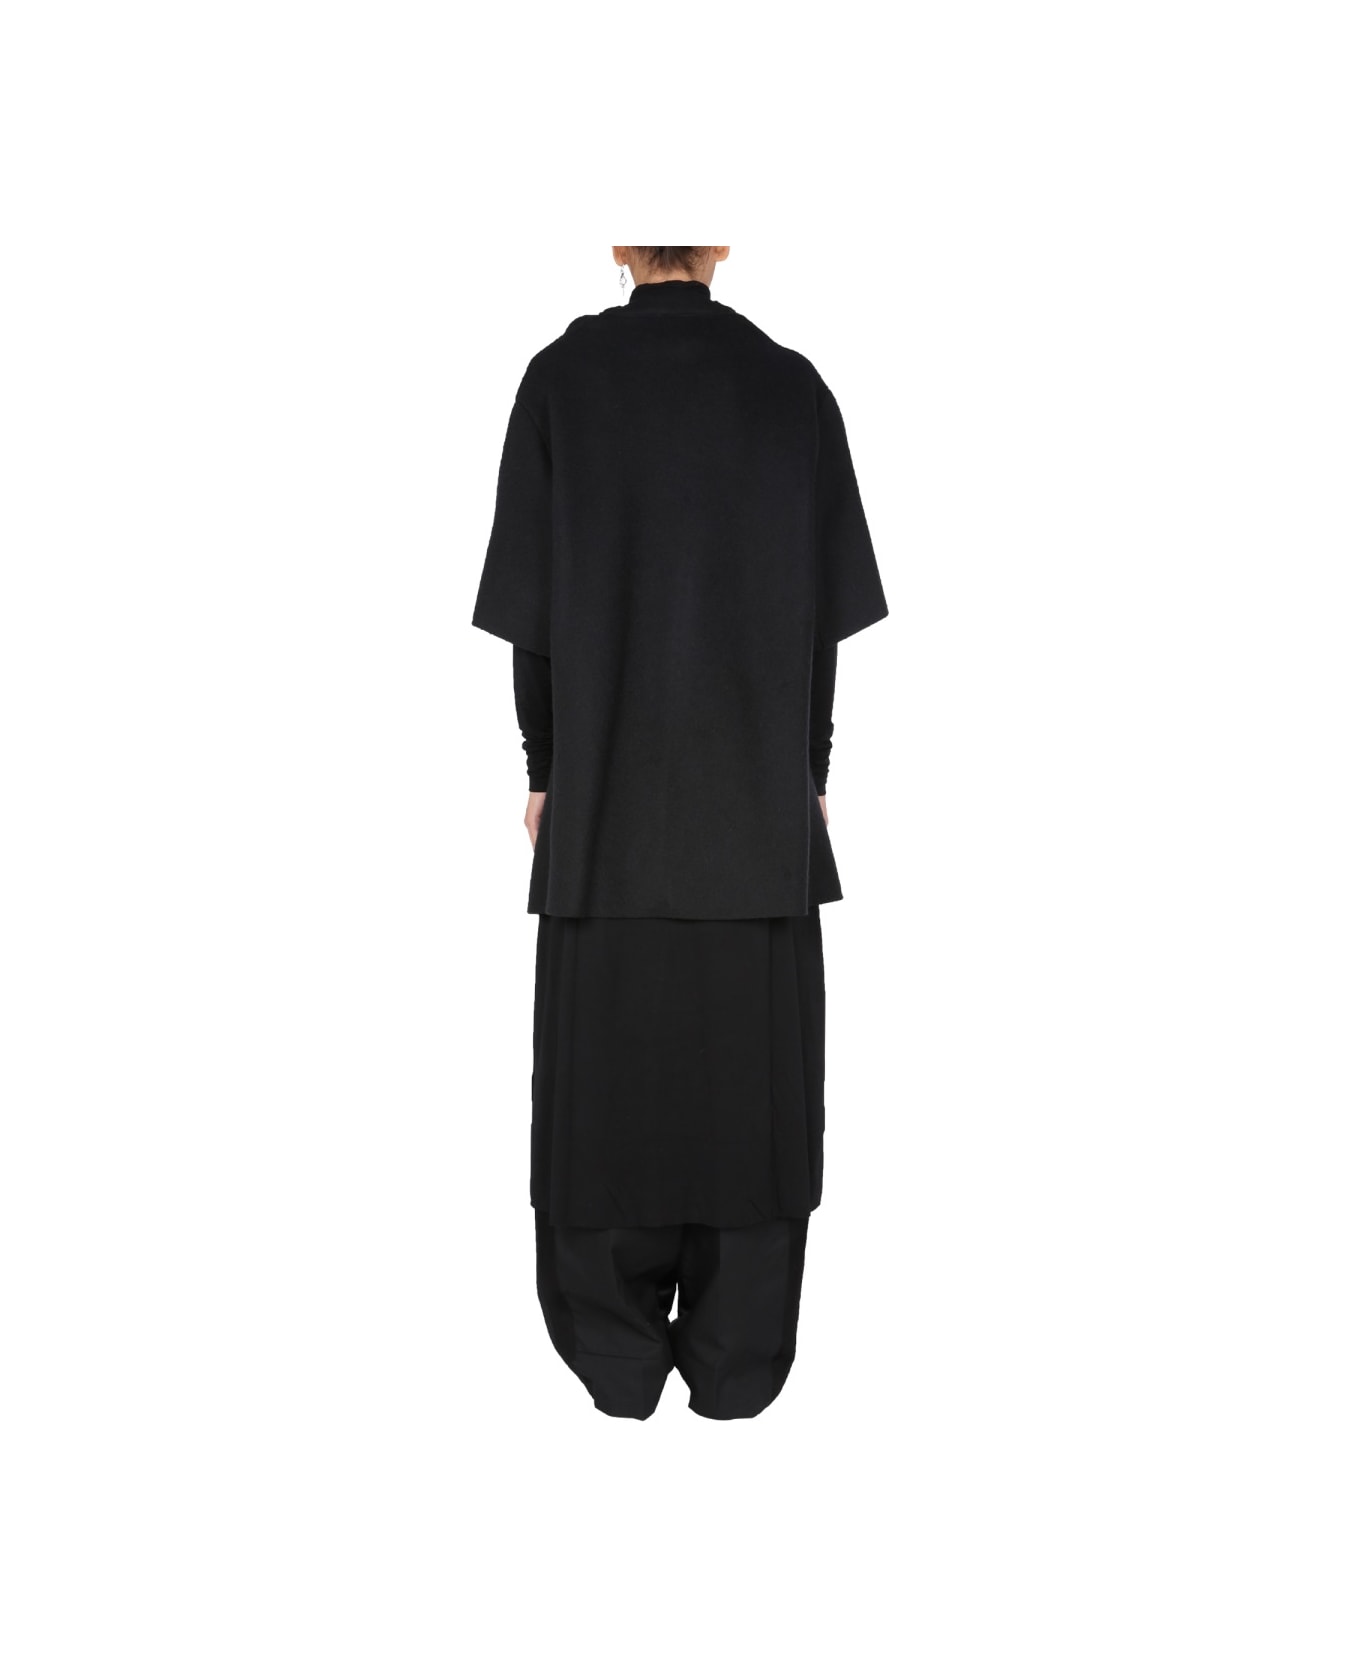 Raf Simons "ataraxia" Wool Blend Dress - BLACK